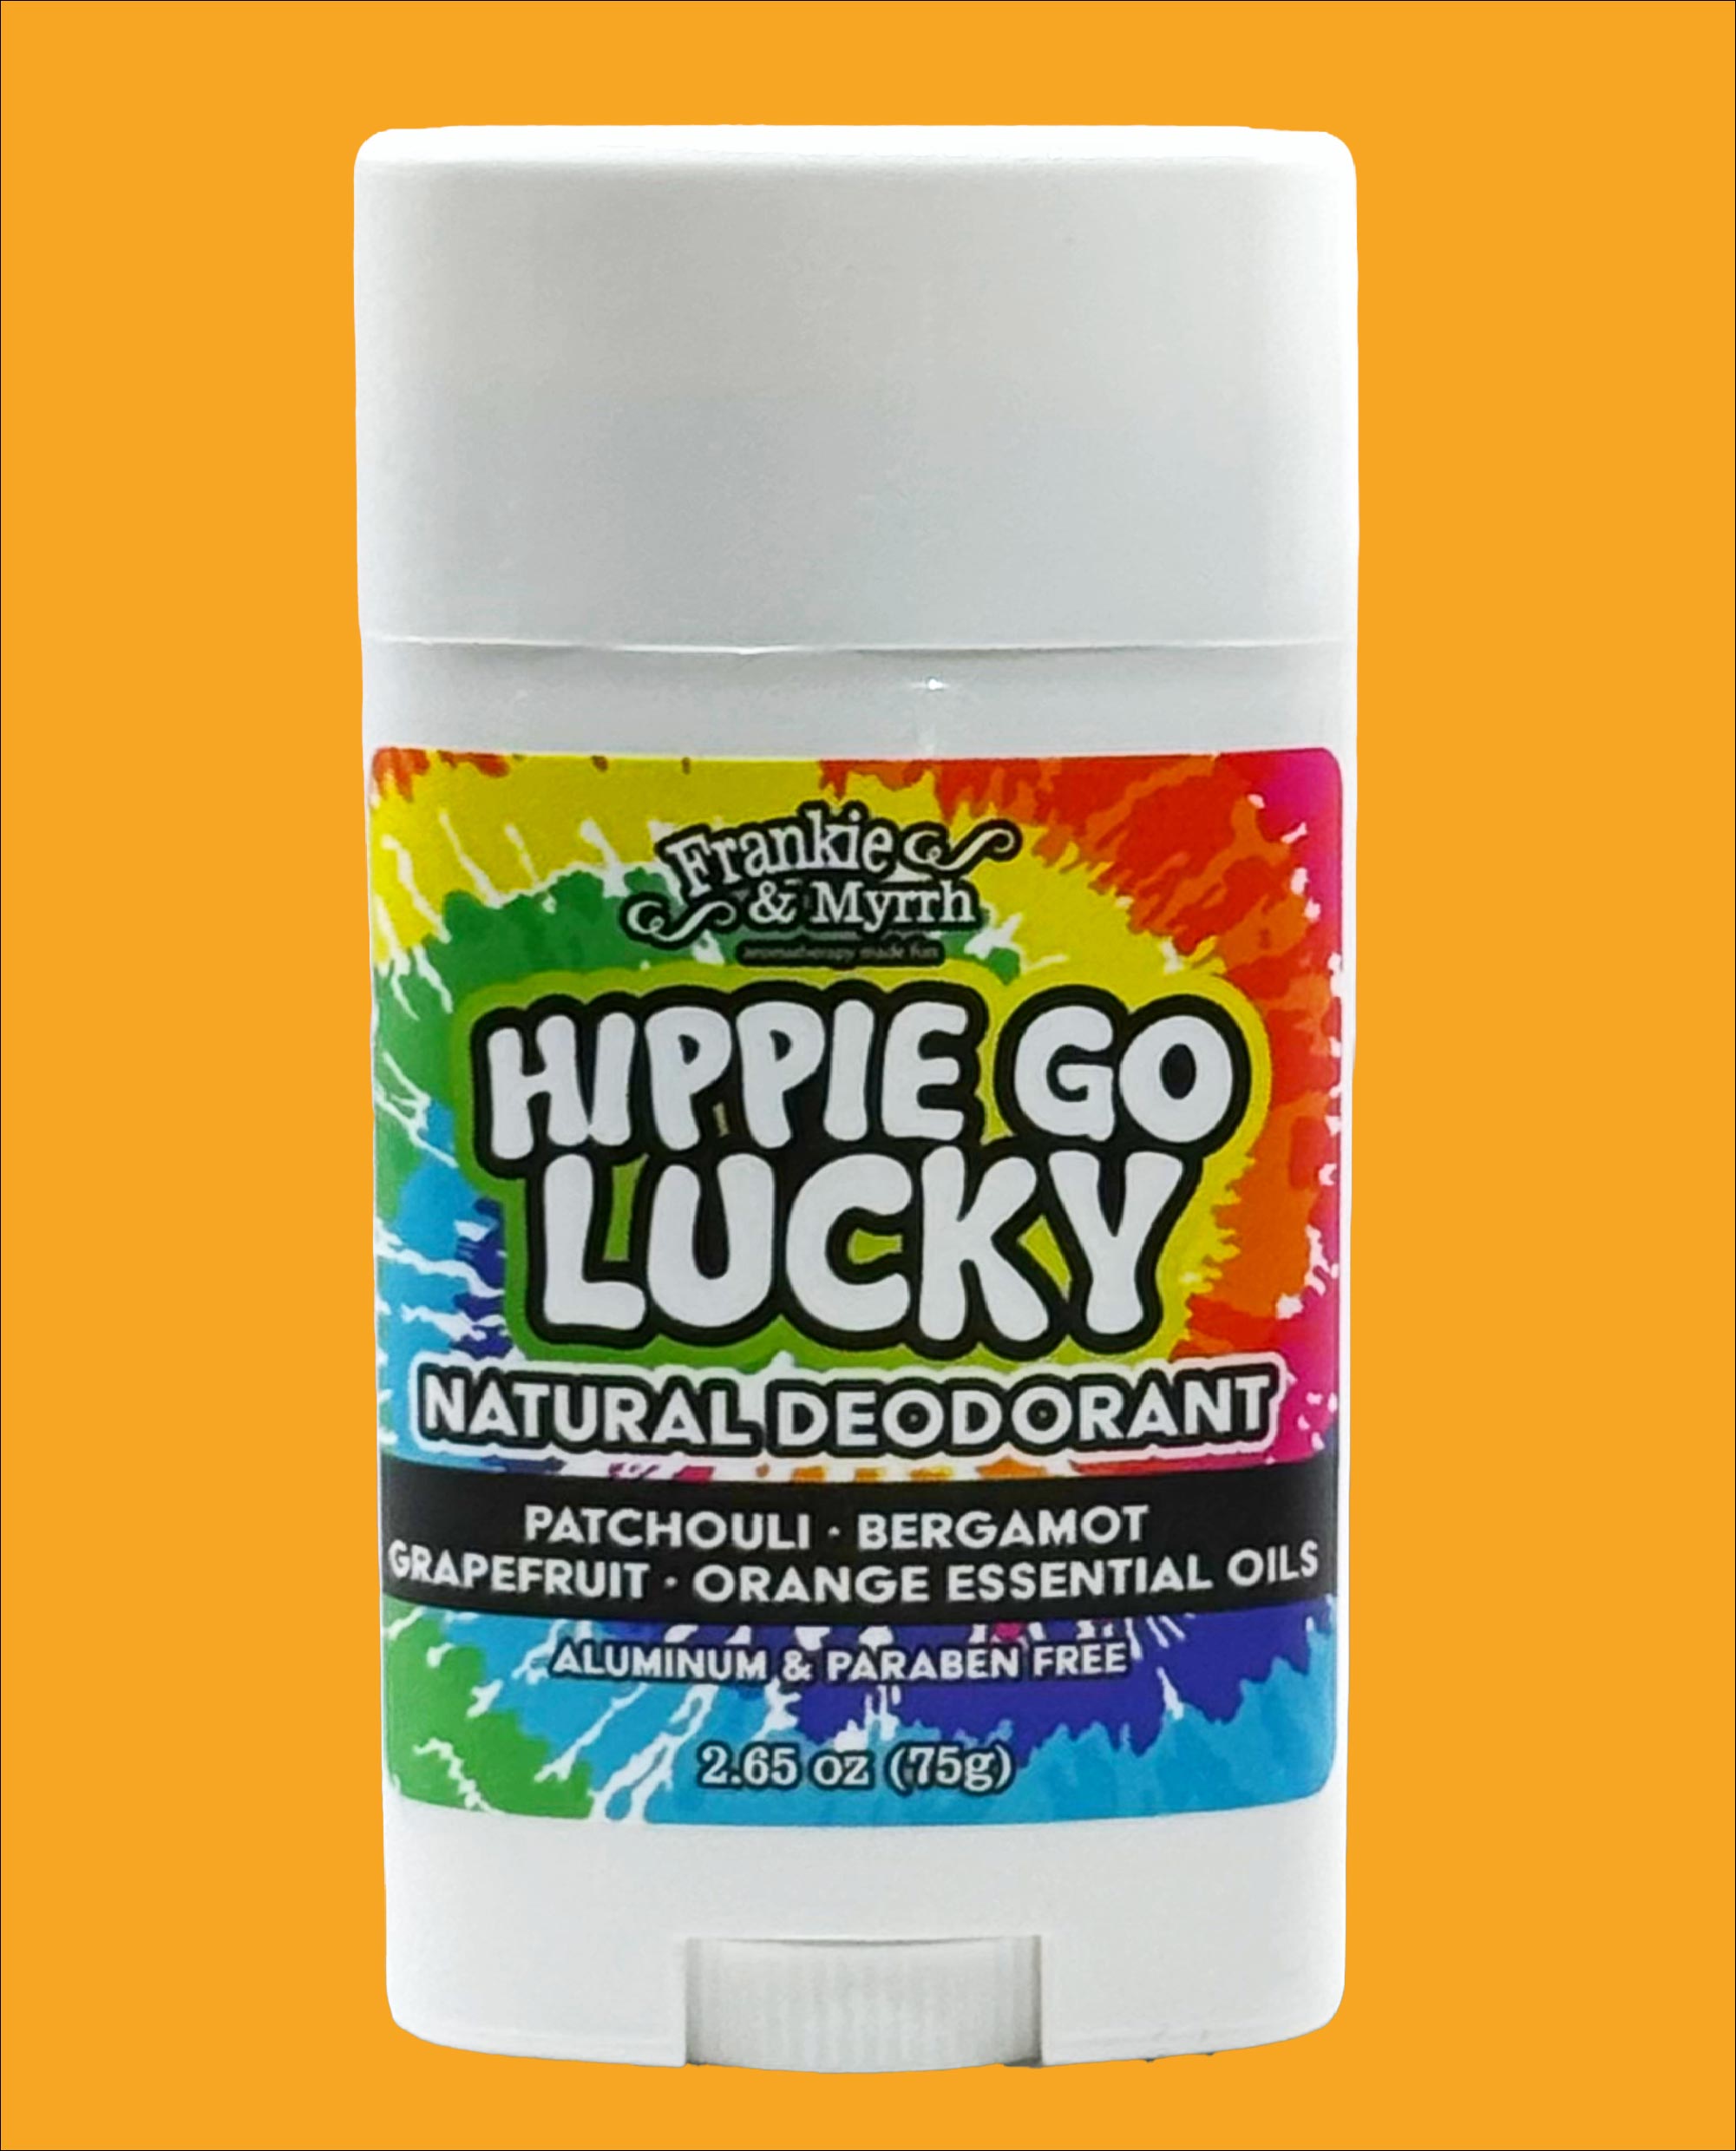 Hippie Go Lucky | Natural Deodorant | Patchouli, Bergamot, Sweet Orange, Grapefruit